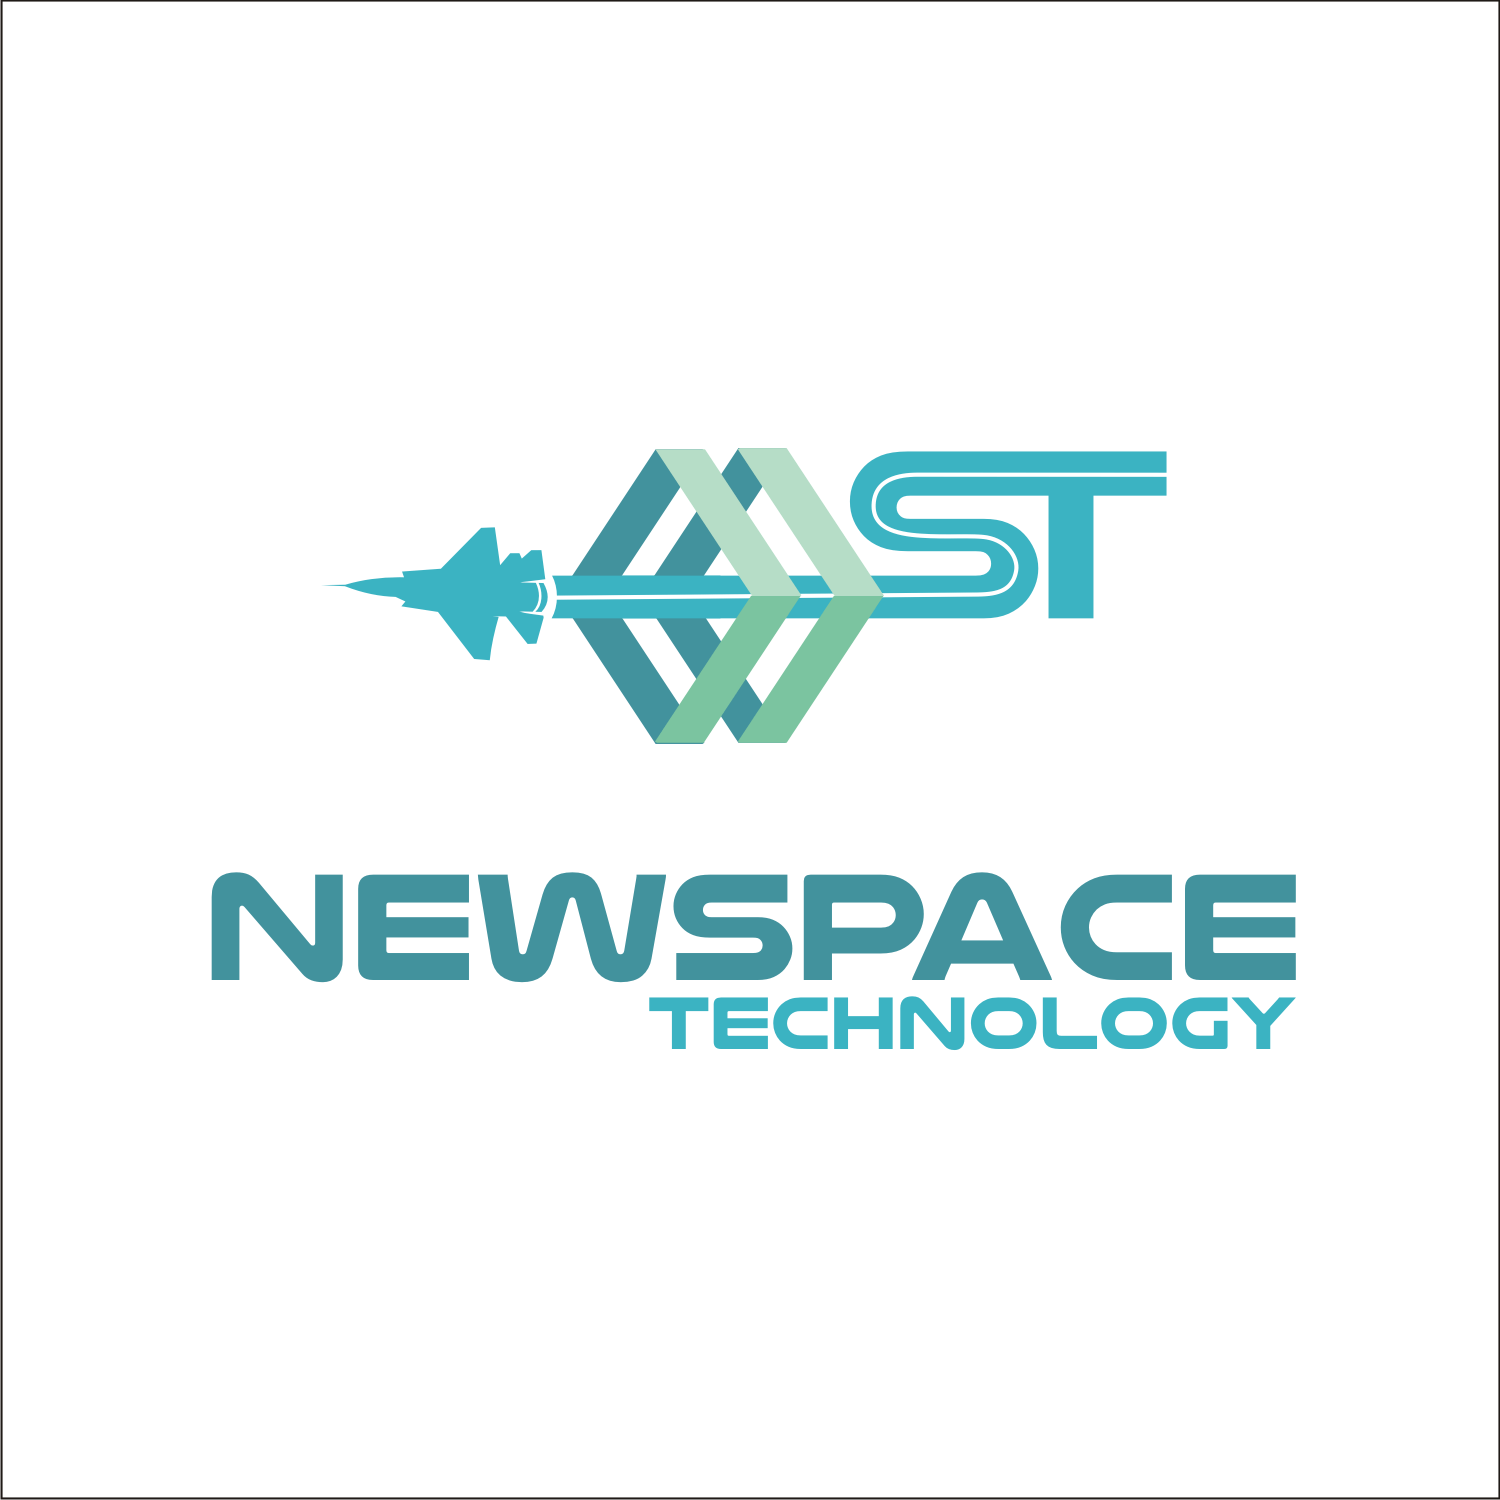 European Company Logo - Playful, Modern, It Company Logo Design for NEW SPACE TECHNOLOGY